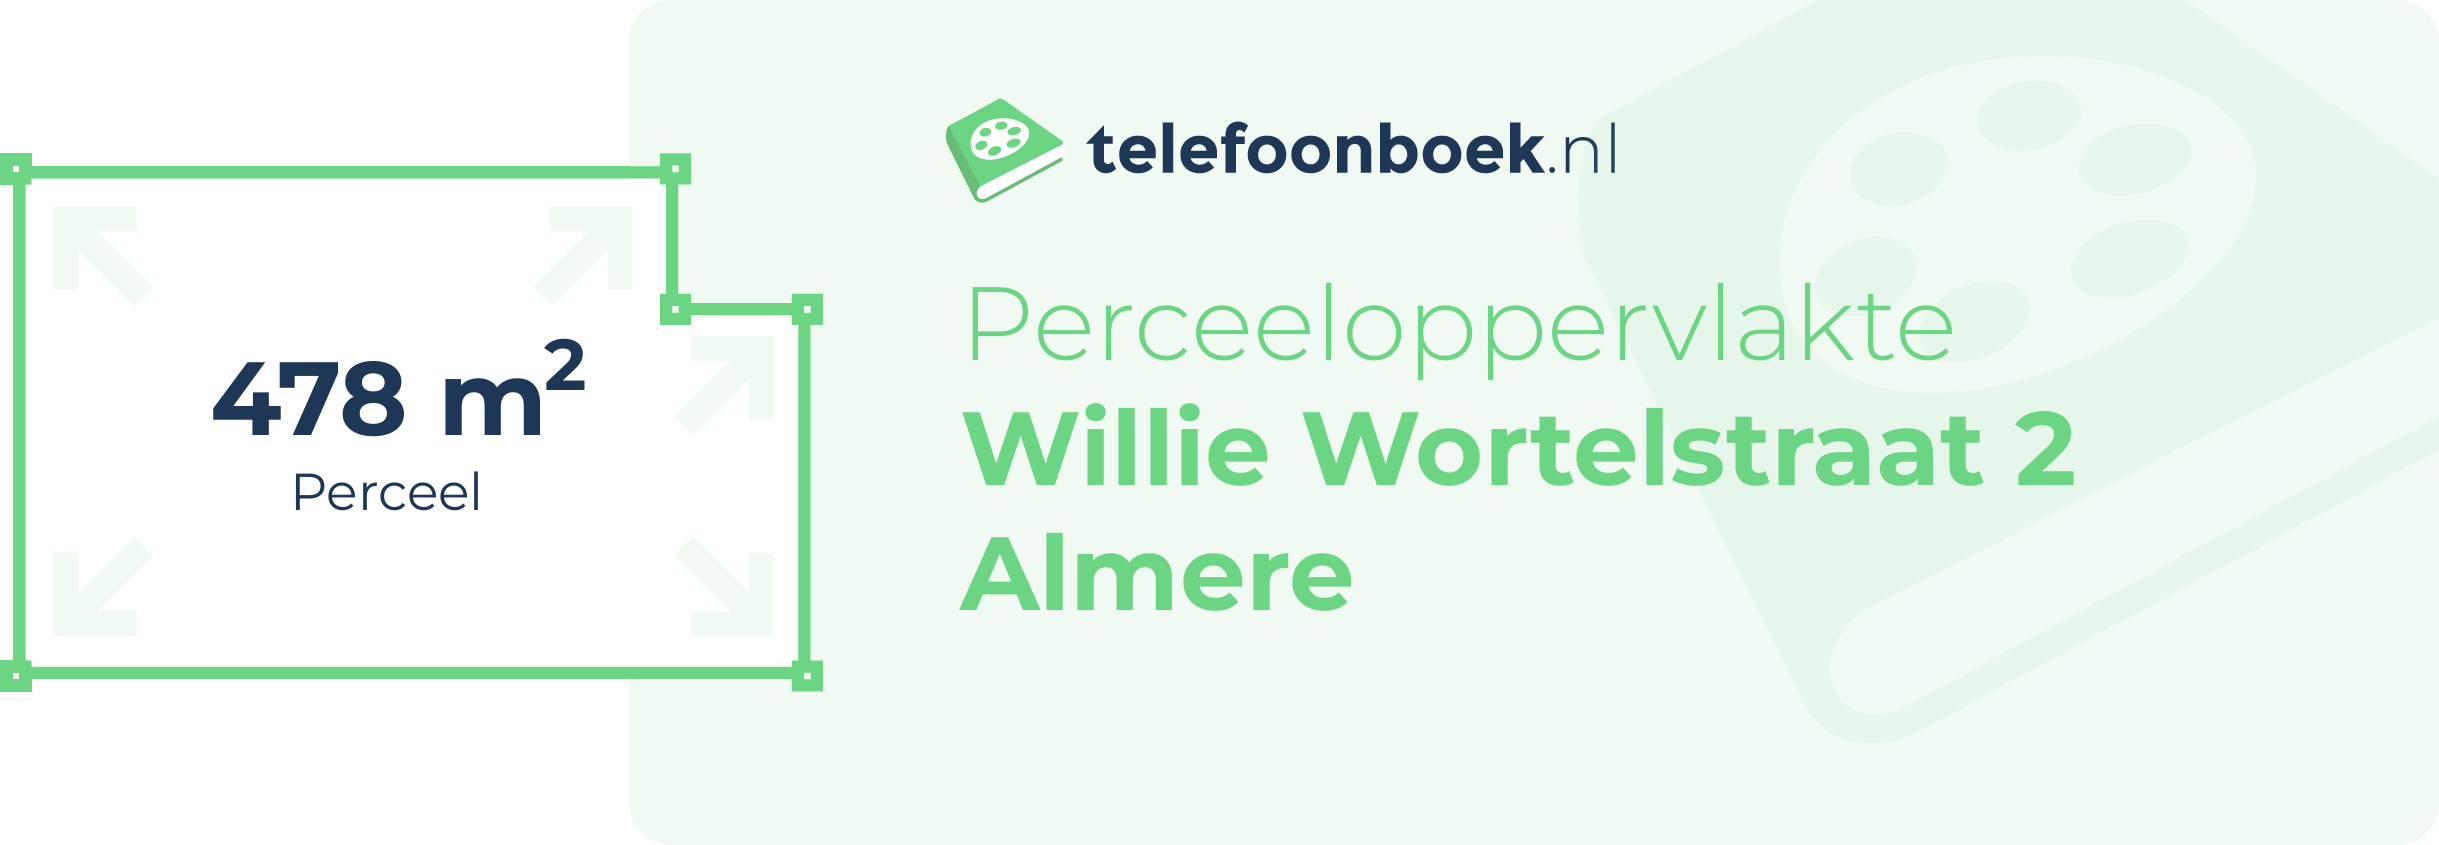 Perceeloppervlakte Willie Wortelstraat 2 Almere